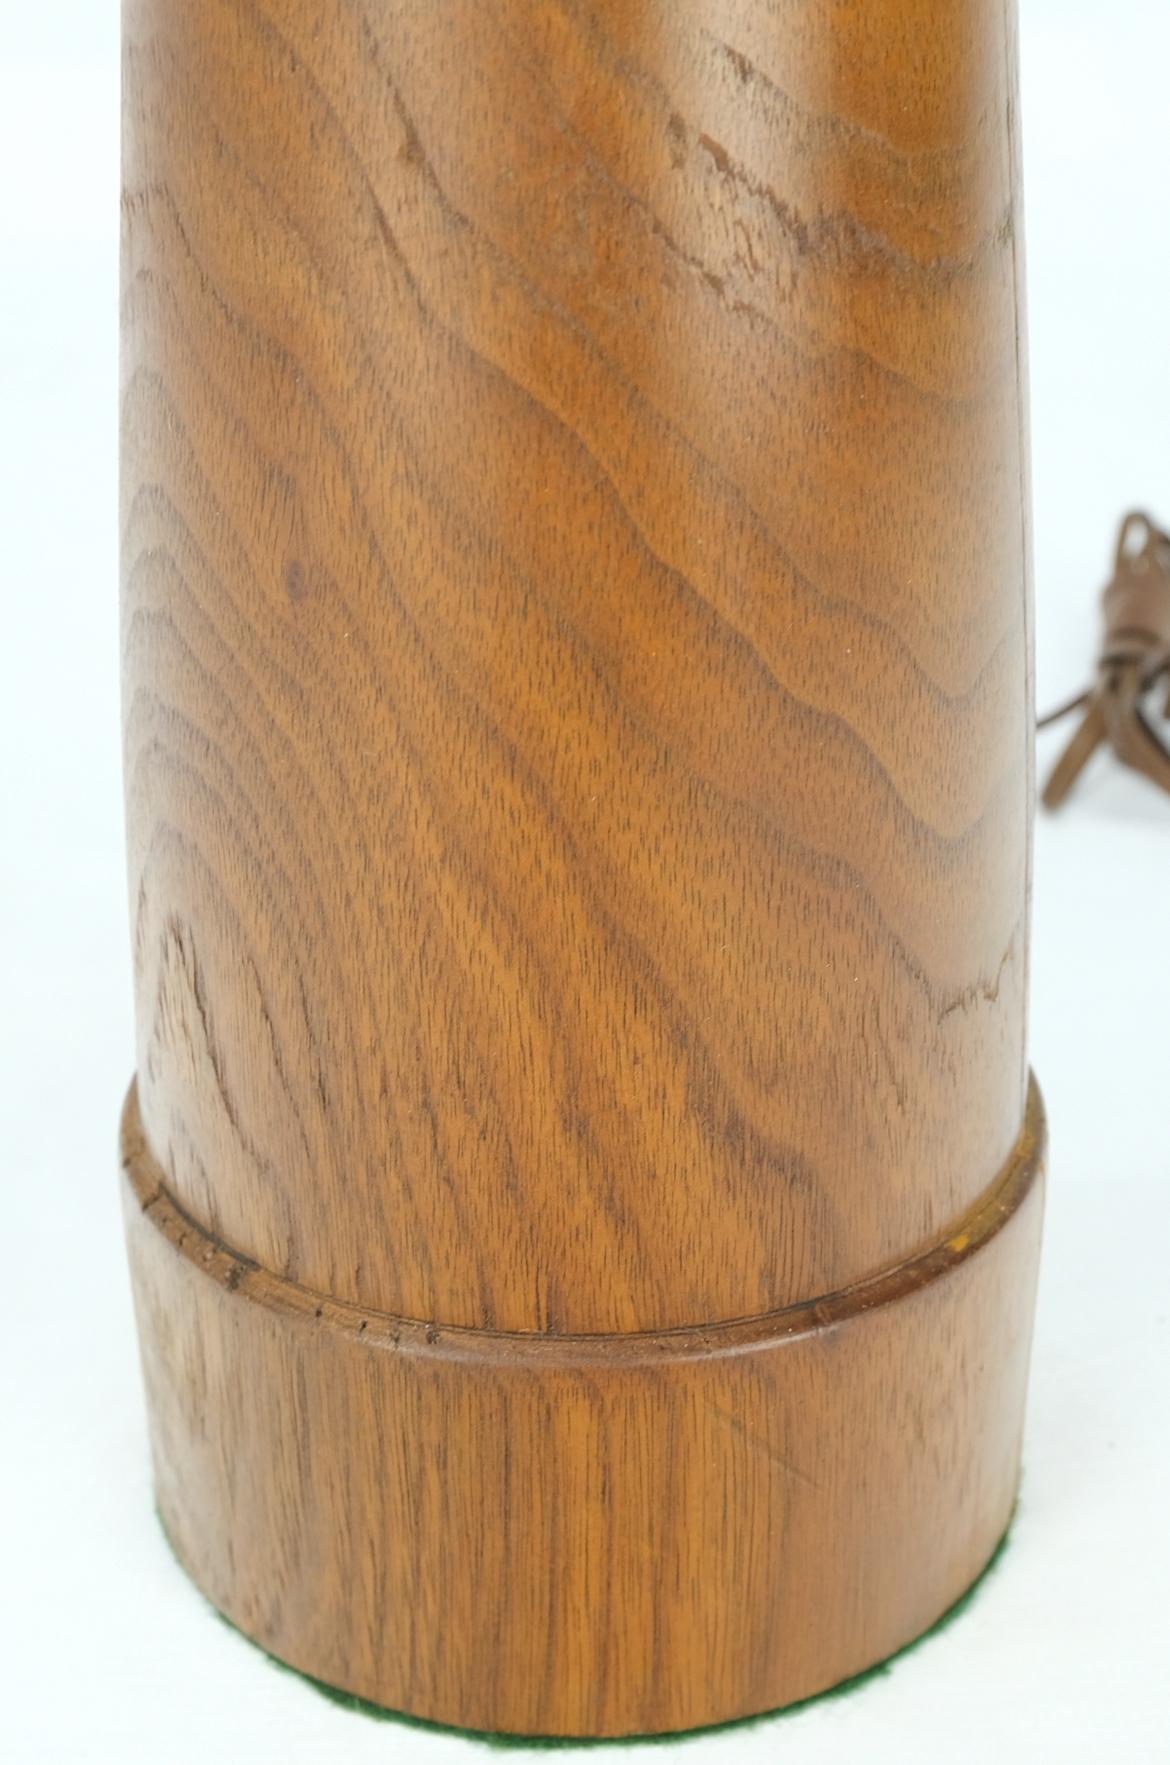 Turned Walnut or Teak Mid-Century Modern Table Lamp, c.1970s In Good Condition For Sale In Rockaway, NJ